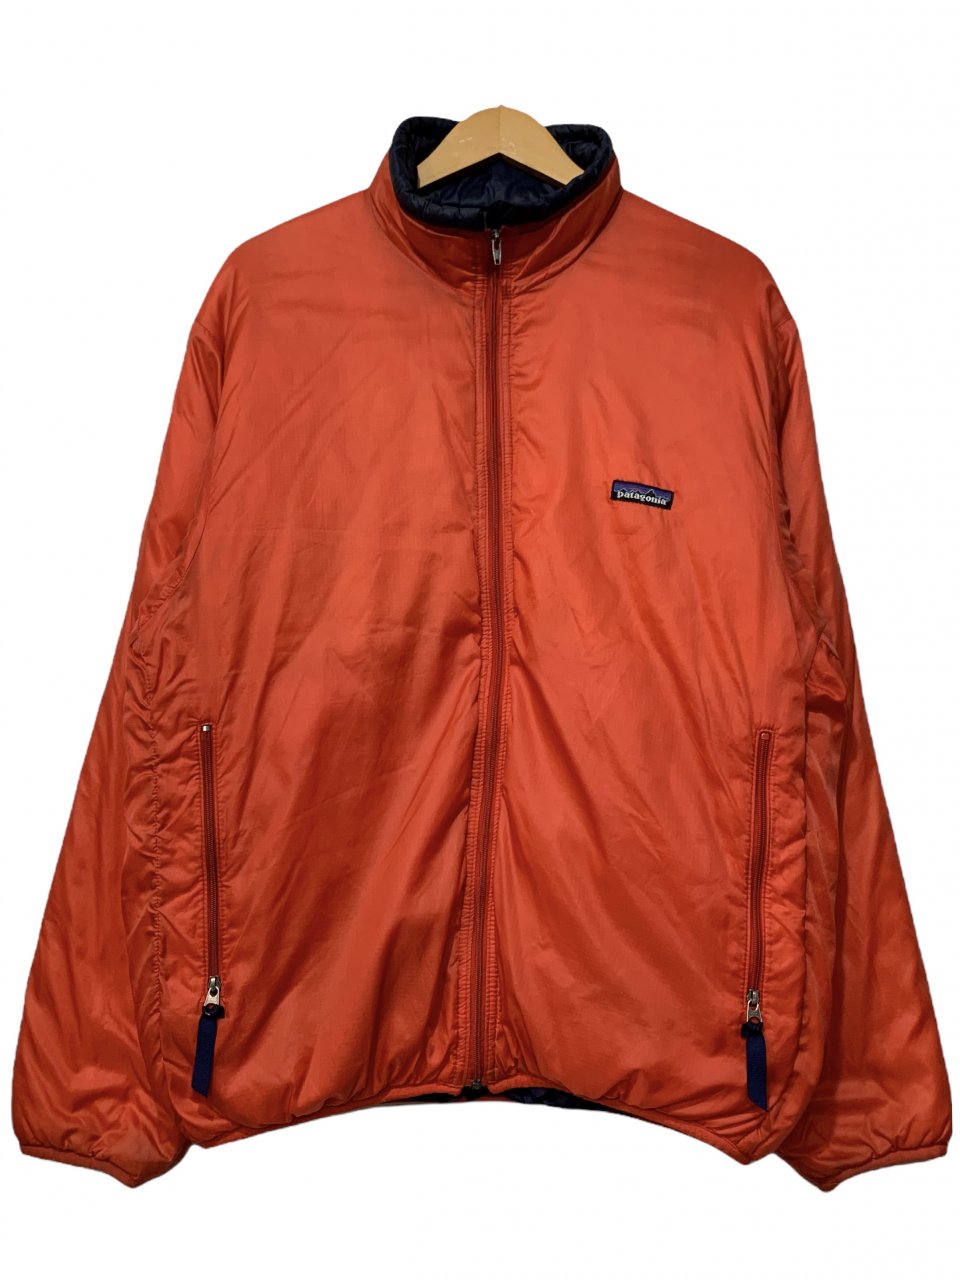 USA製 97年 patagonia Puffball Jacket 